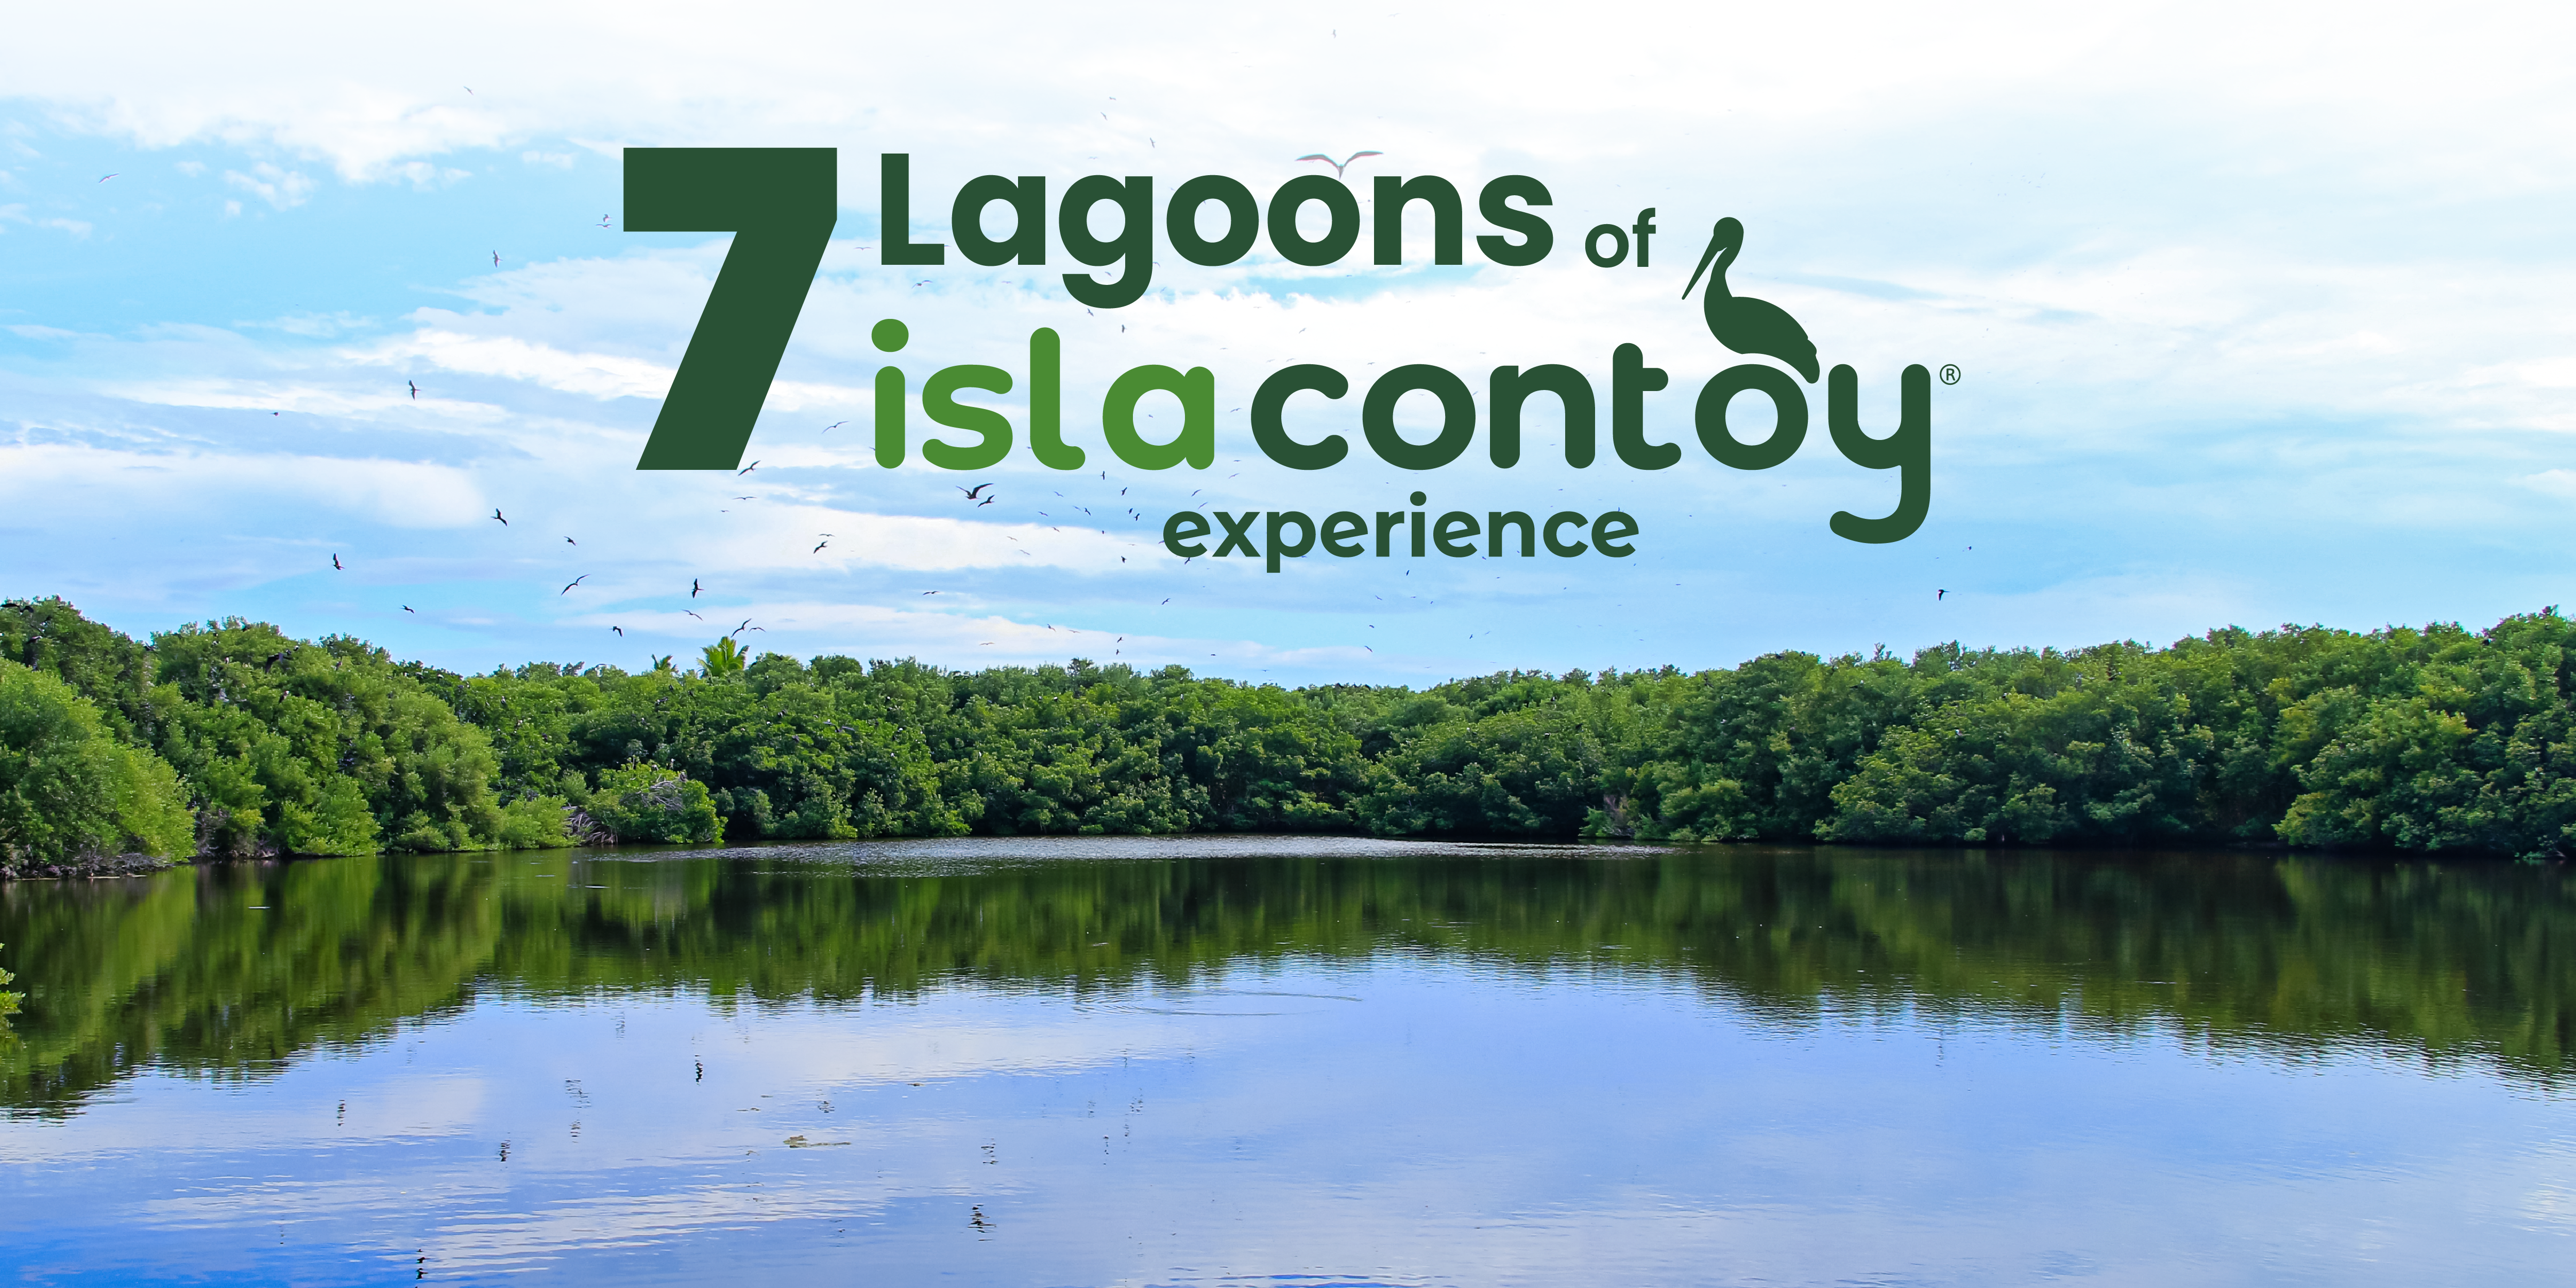 The 7 Lagoons of Isla Contoy